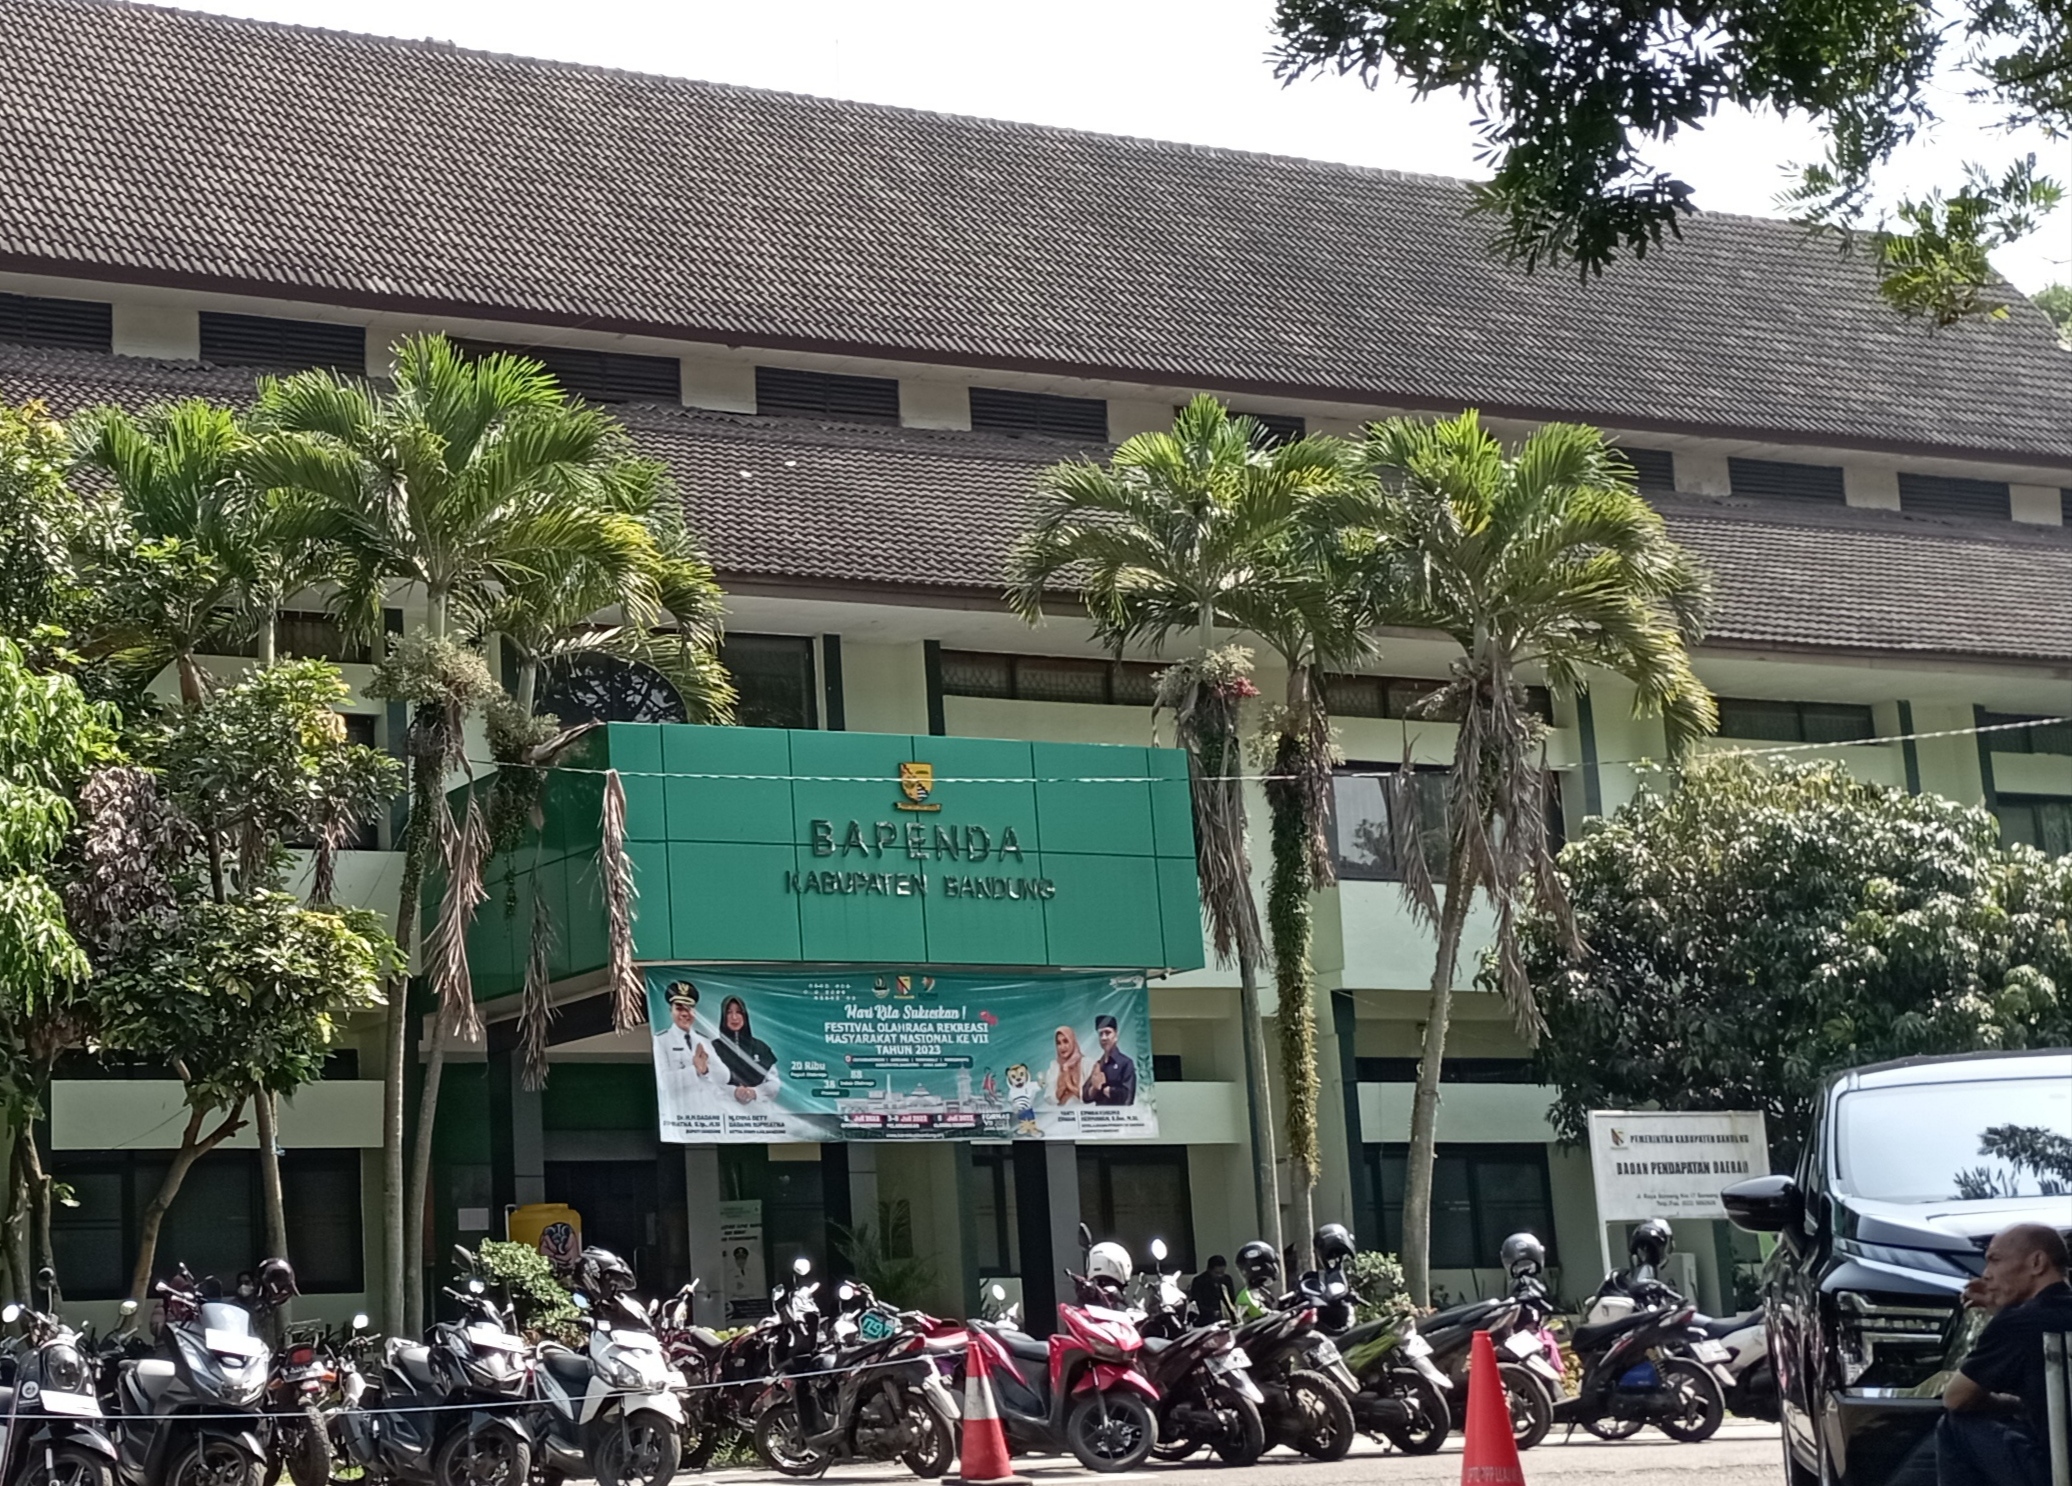 Kantor Bapenda Kabupaten Bandung Jalan Raya Soreang, Komplek Perkantoran Pemkab Bandung. (Foto: Deddy)